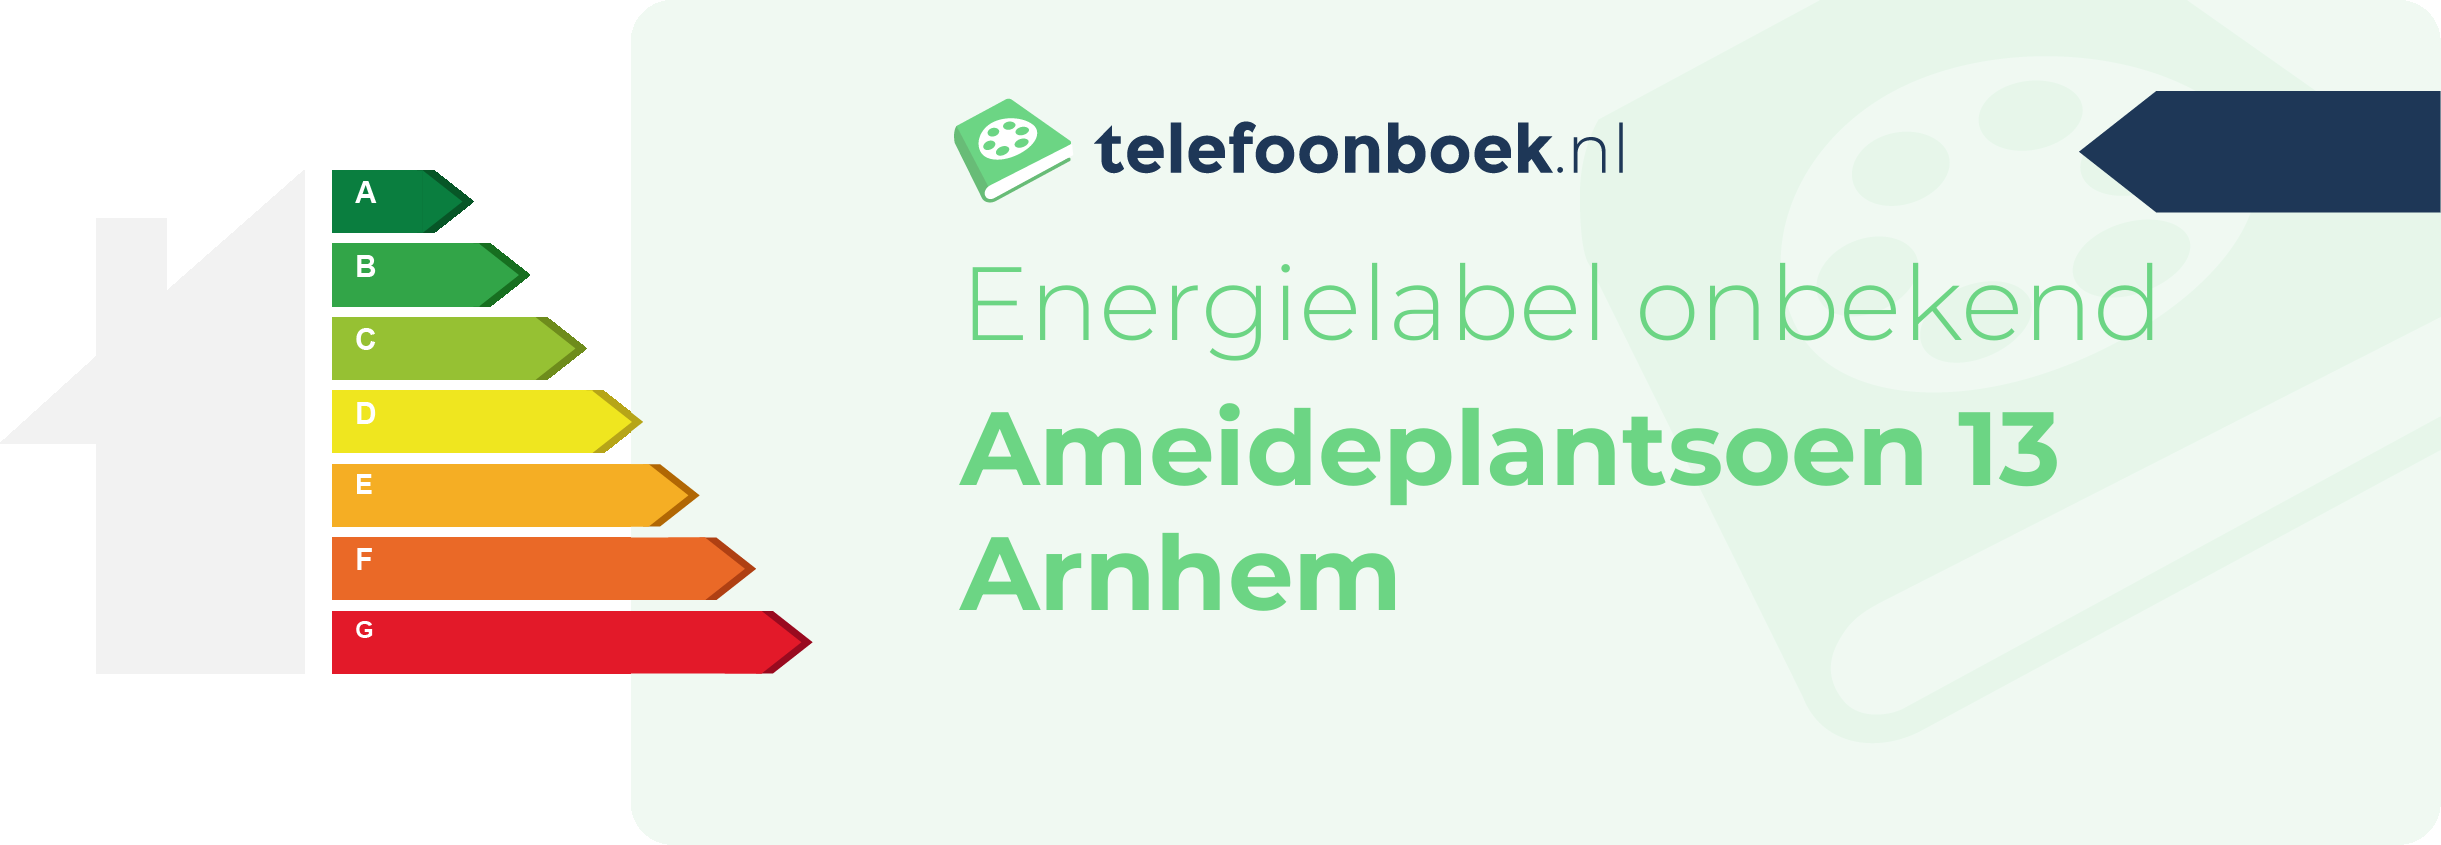 Energielabel Ameideplantsoen 13 Arnhem